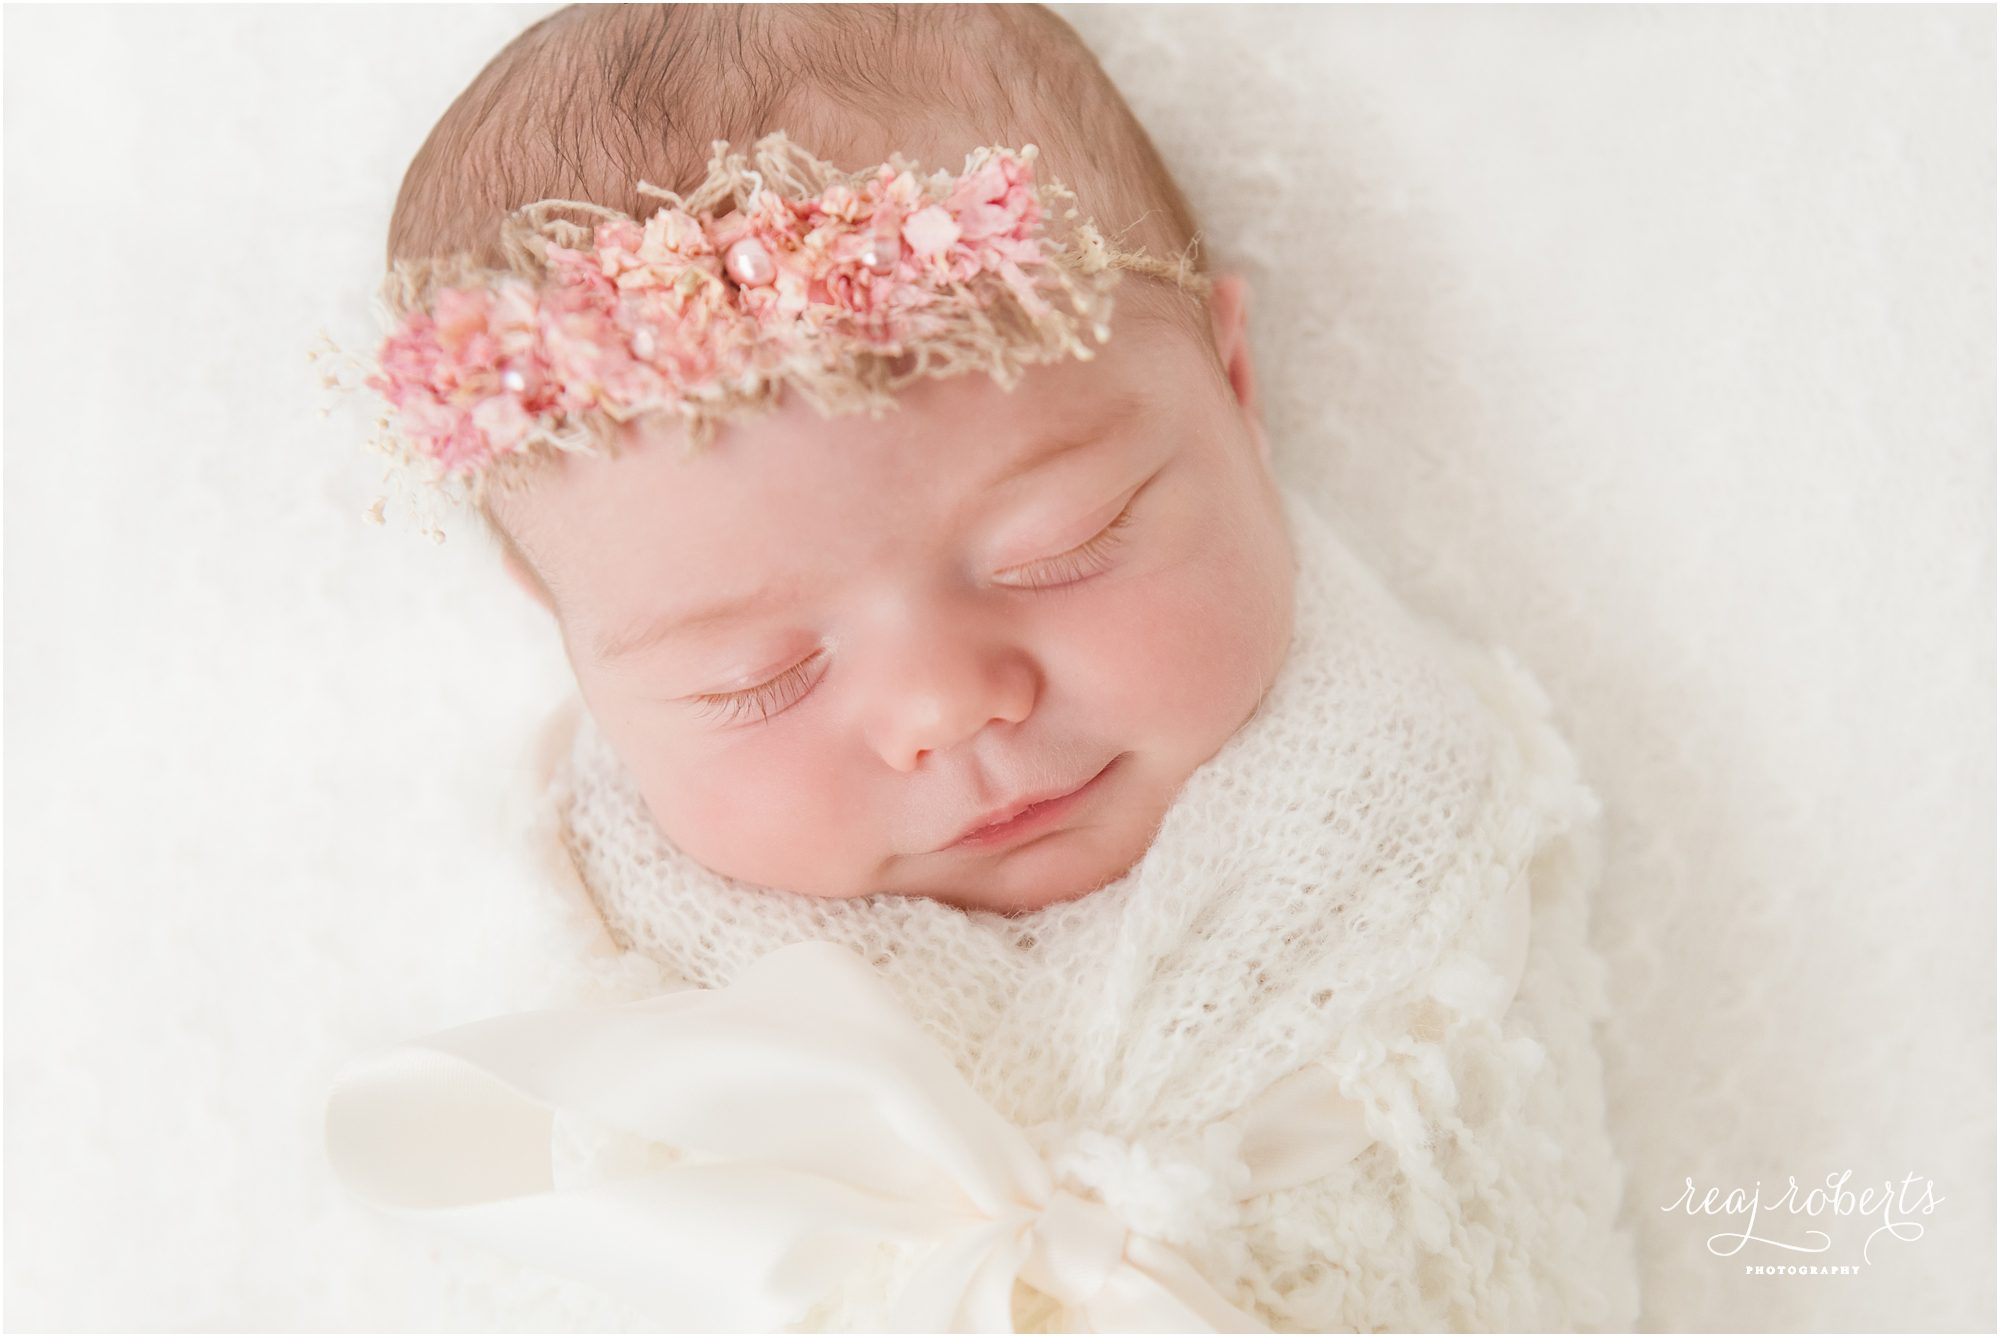 Newborn photos baby smiling | © Reaj Roberts Photography | Chandler, Arizona